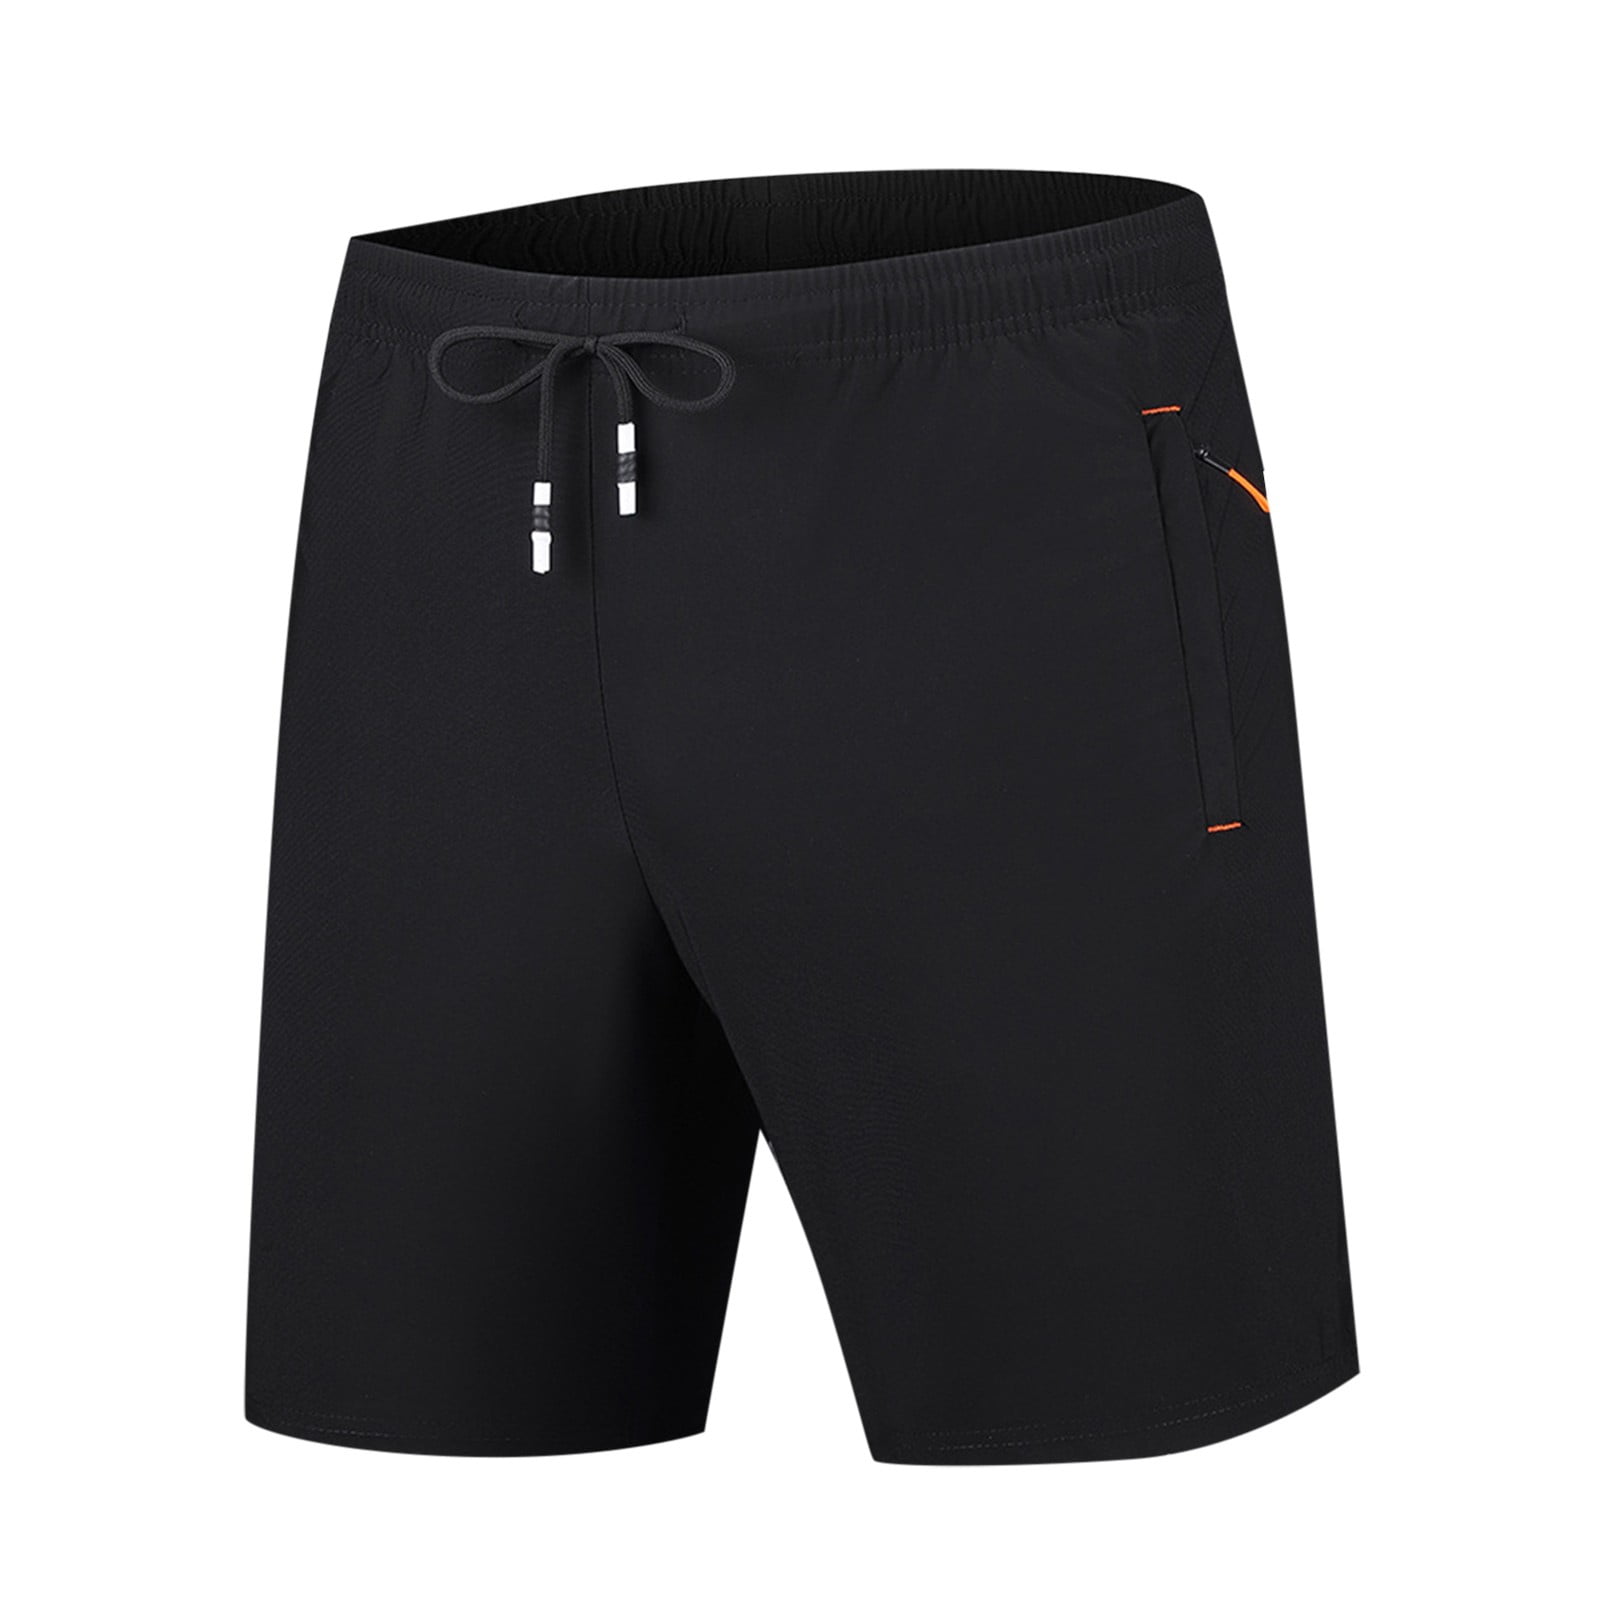 Pedort Shorts For Men Workout Shorts Men Men's Relaxed Fit Cargo Shorts ...